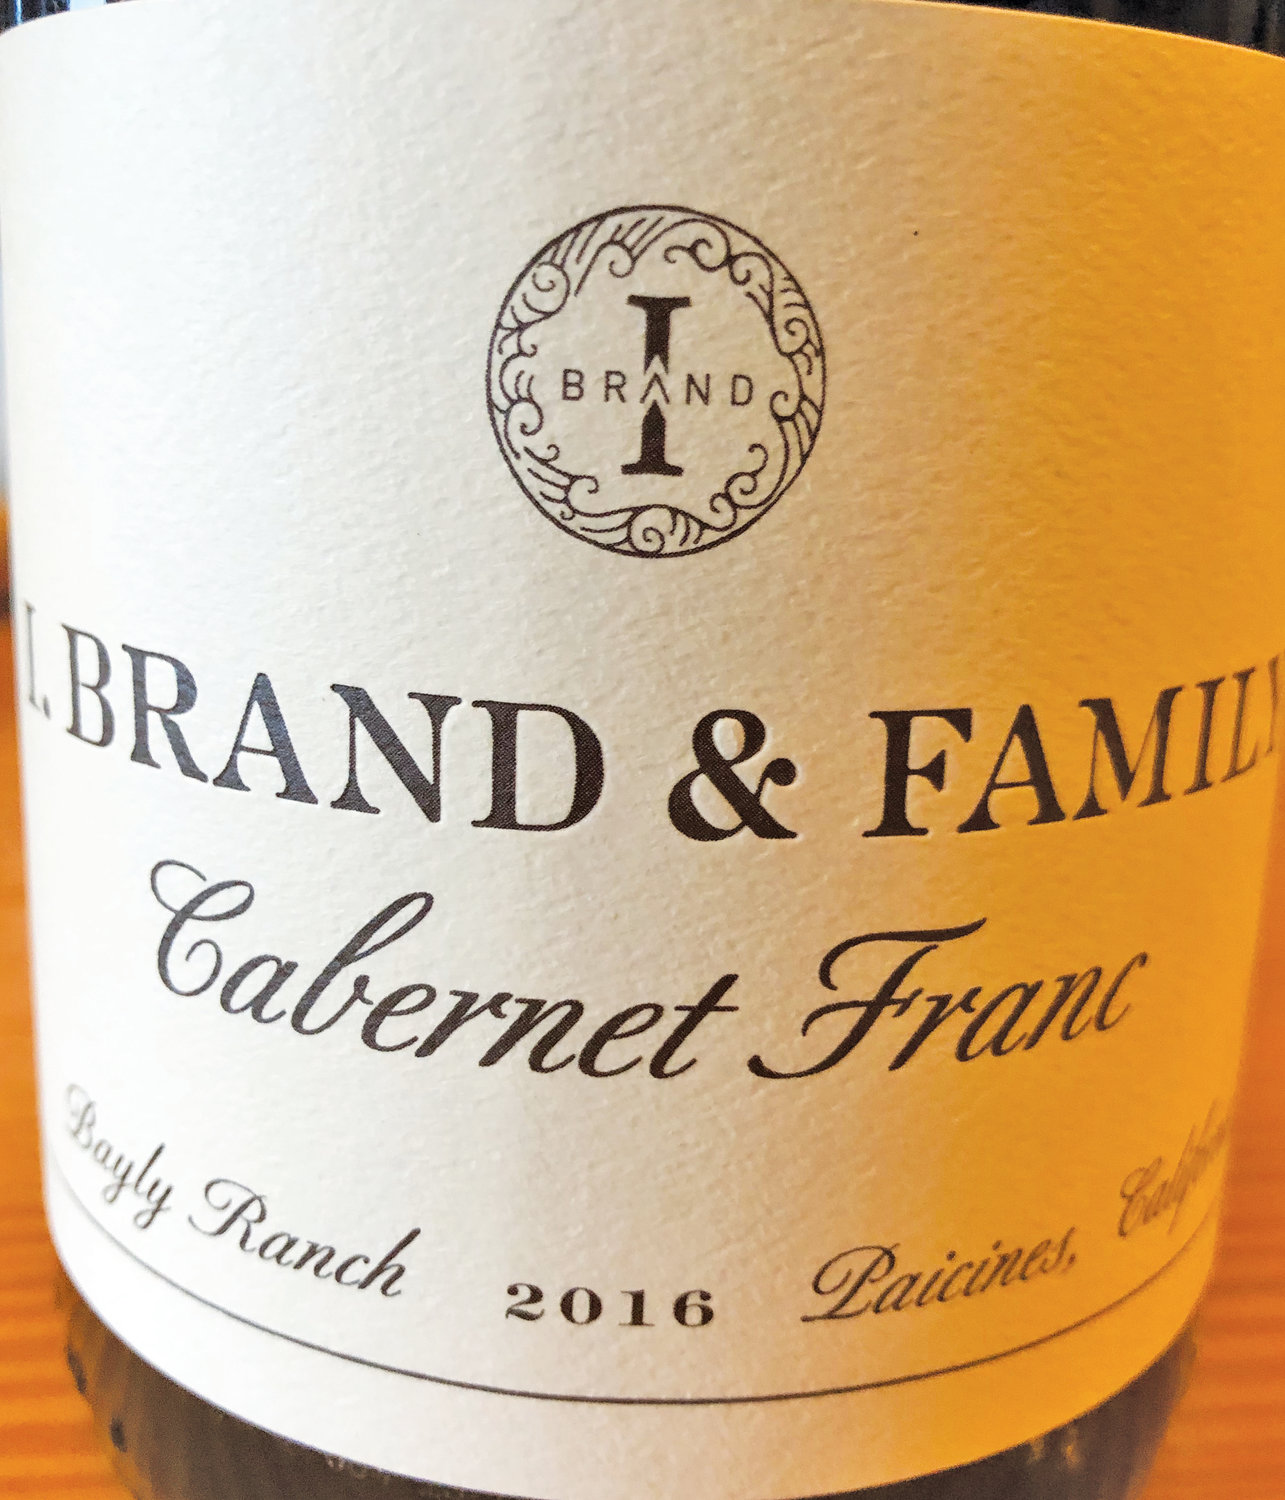 I. Brand & Family's Cabernet Franc.